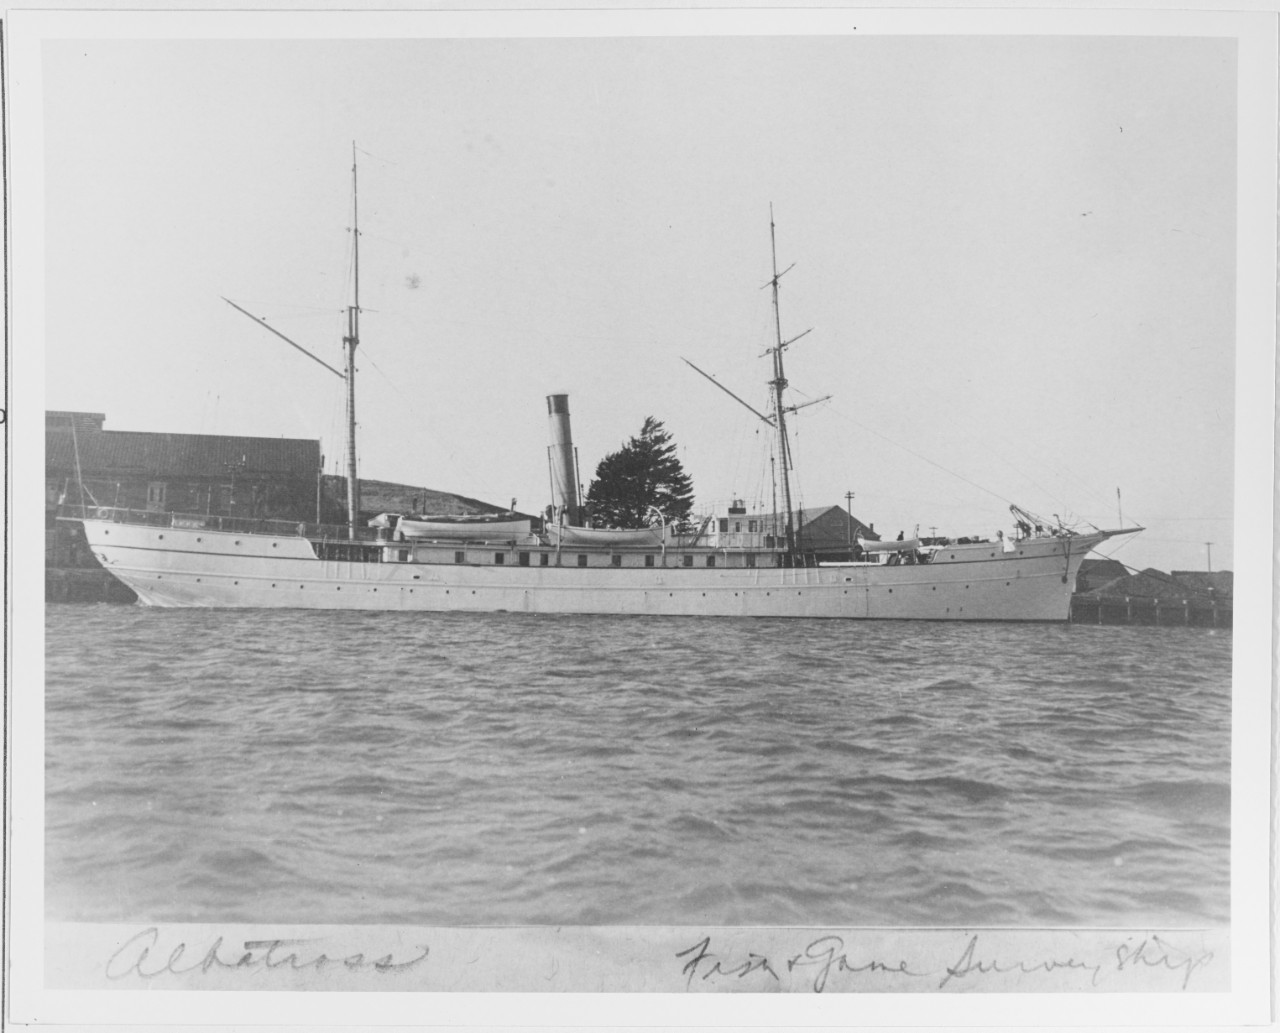 ALBATROSS, U.S. coast survey steamer